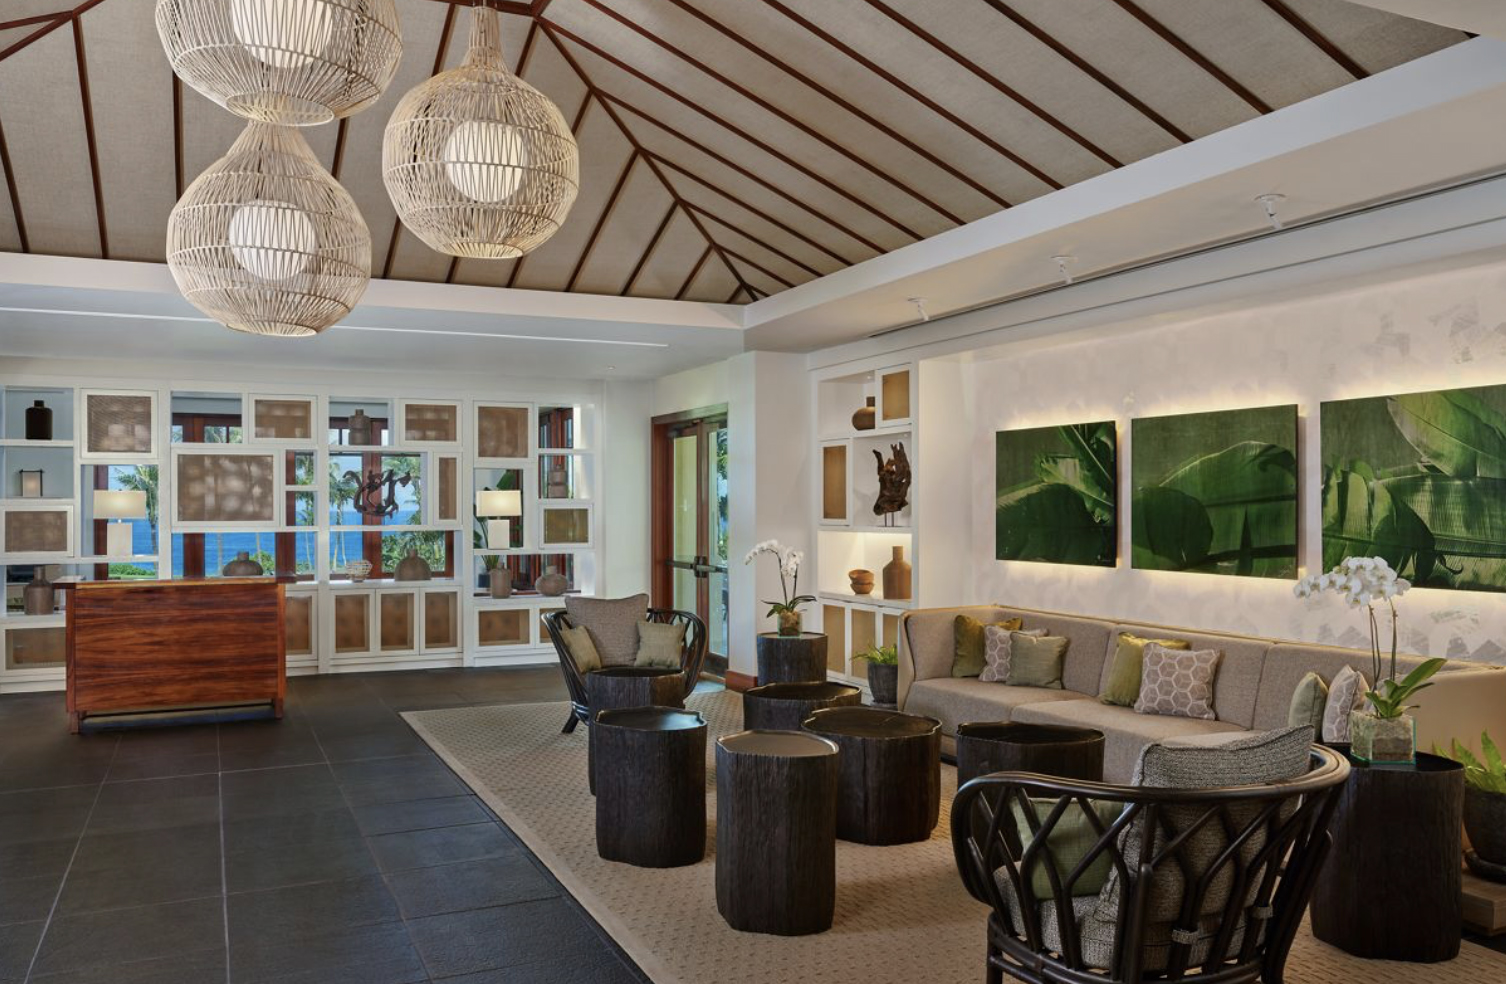 The Ritz Carlton Lobby & Lounge